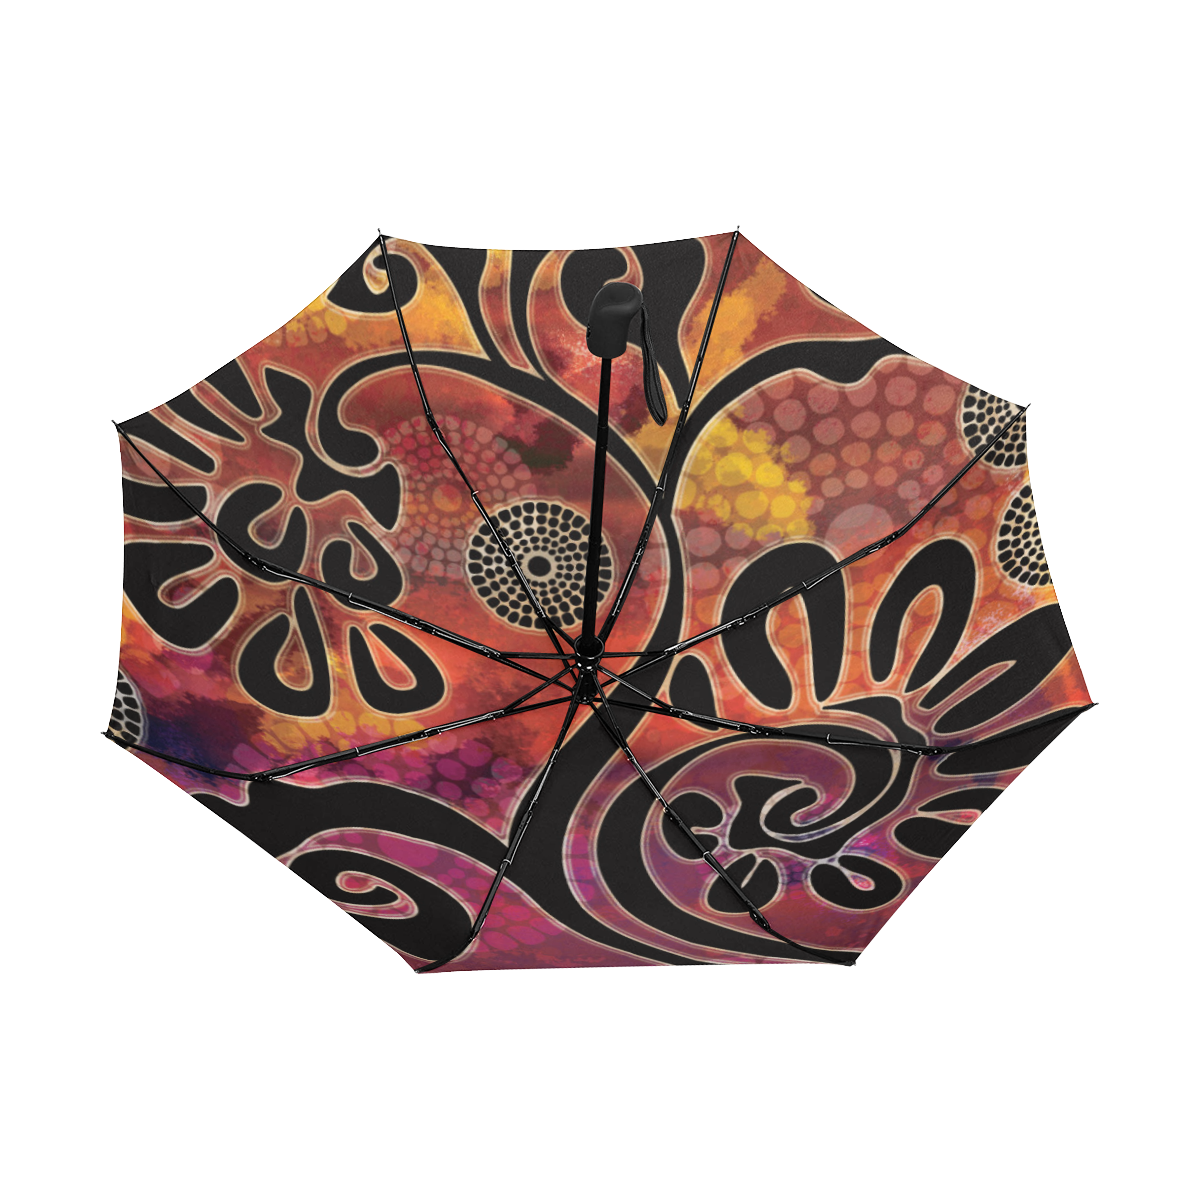 Exotic Vines Anti-UV Auto-Foldable Umbrella (Underside Printing) (U06)